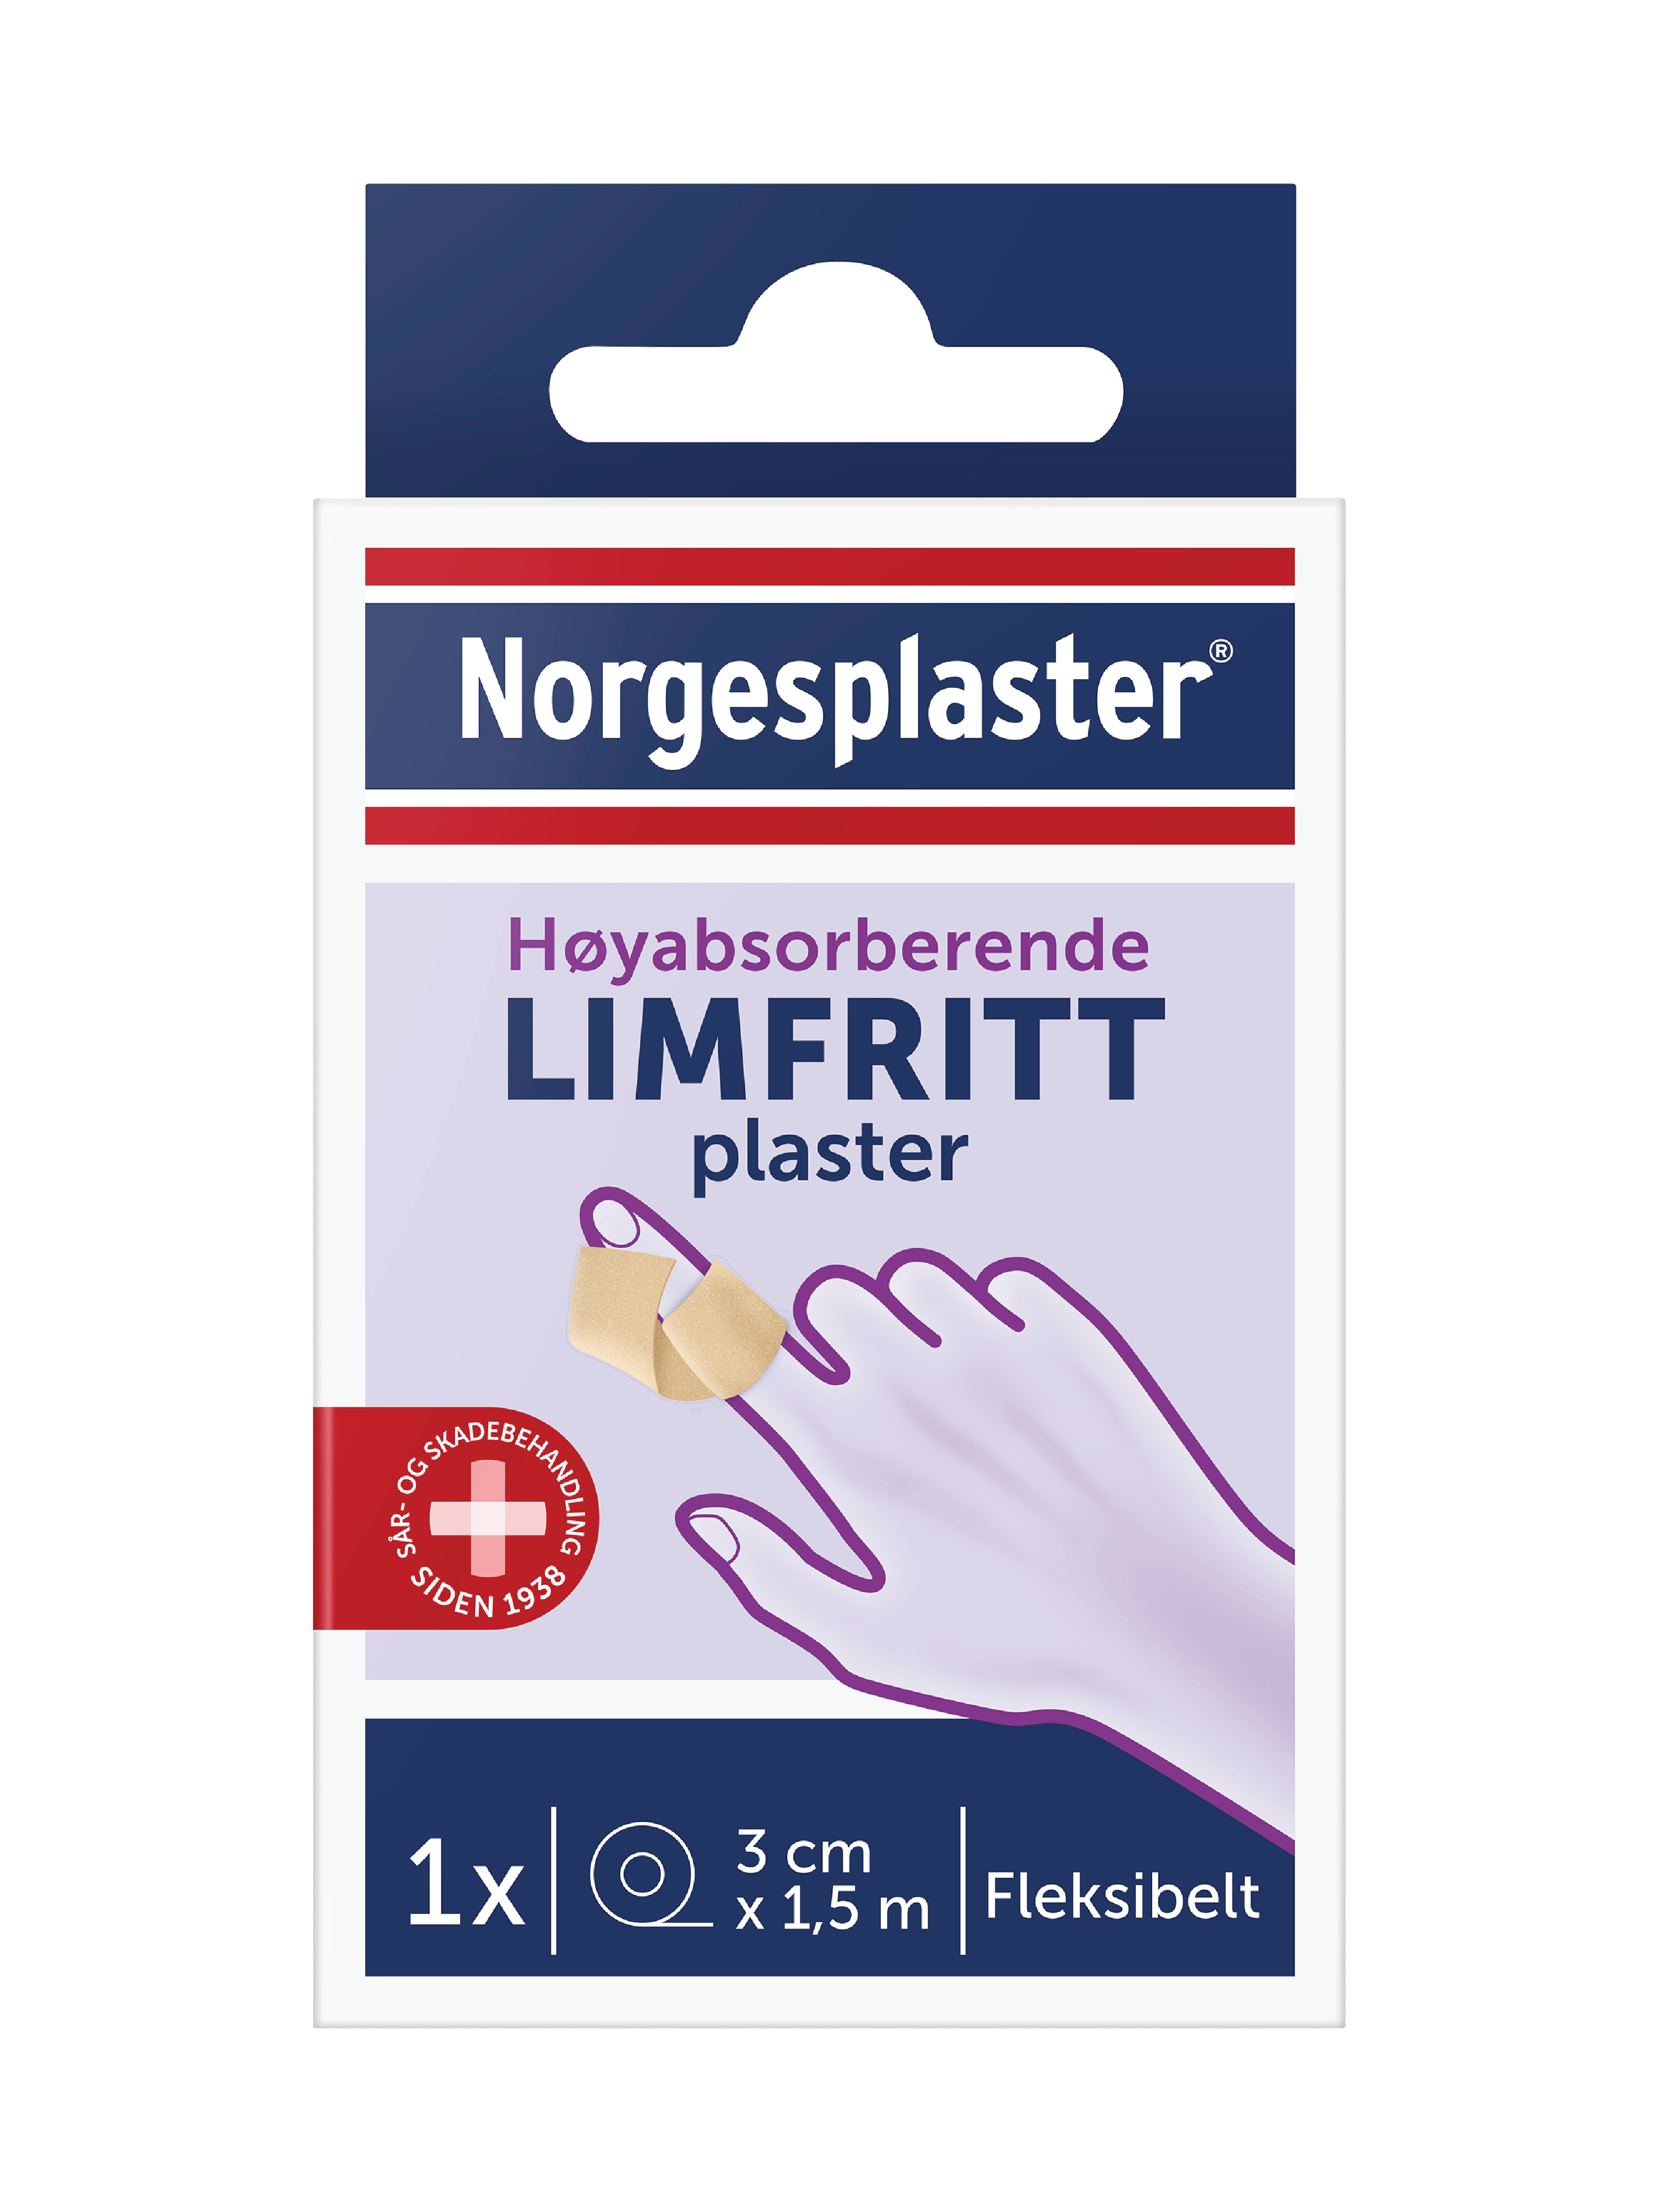 Norgesplaster Limfritt plaster, 3cm x 1,5m, 1 stk.